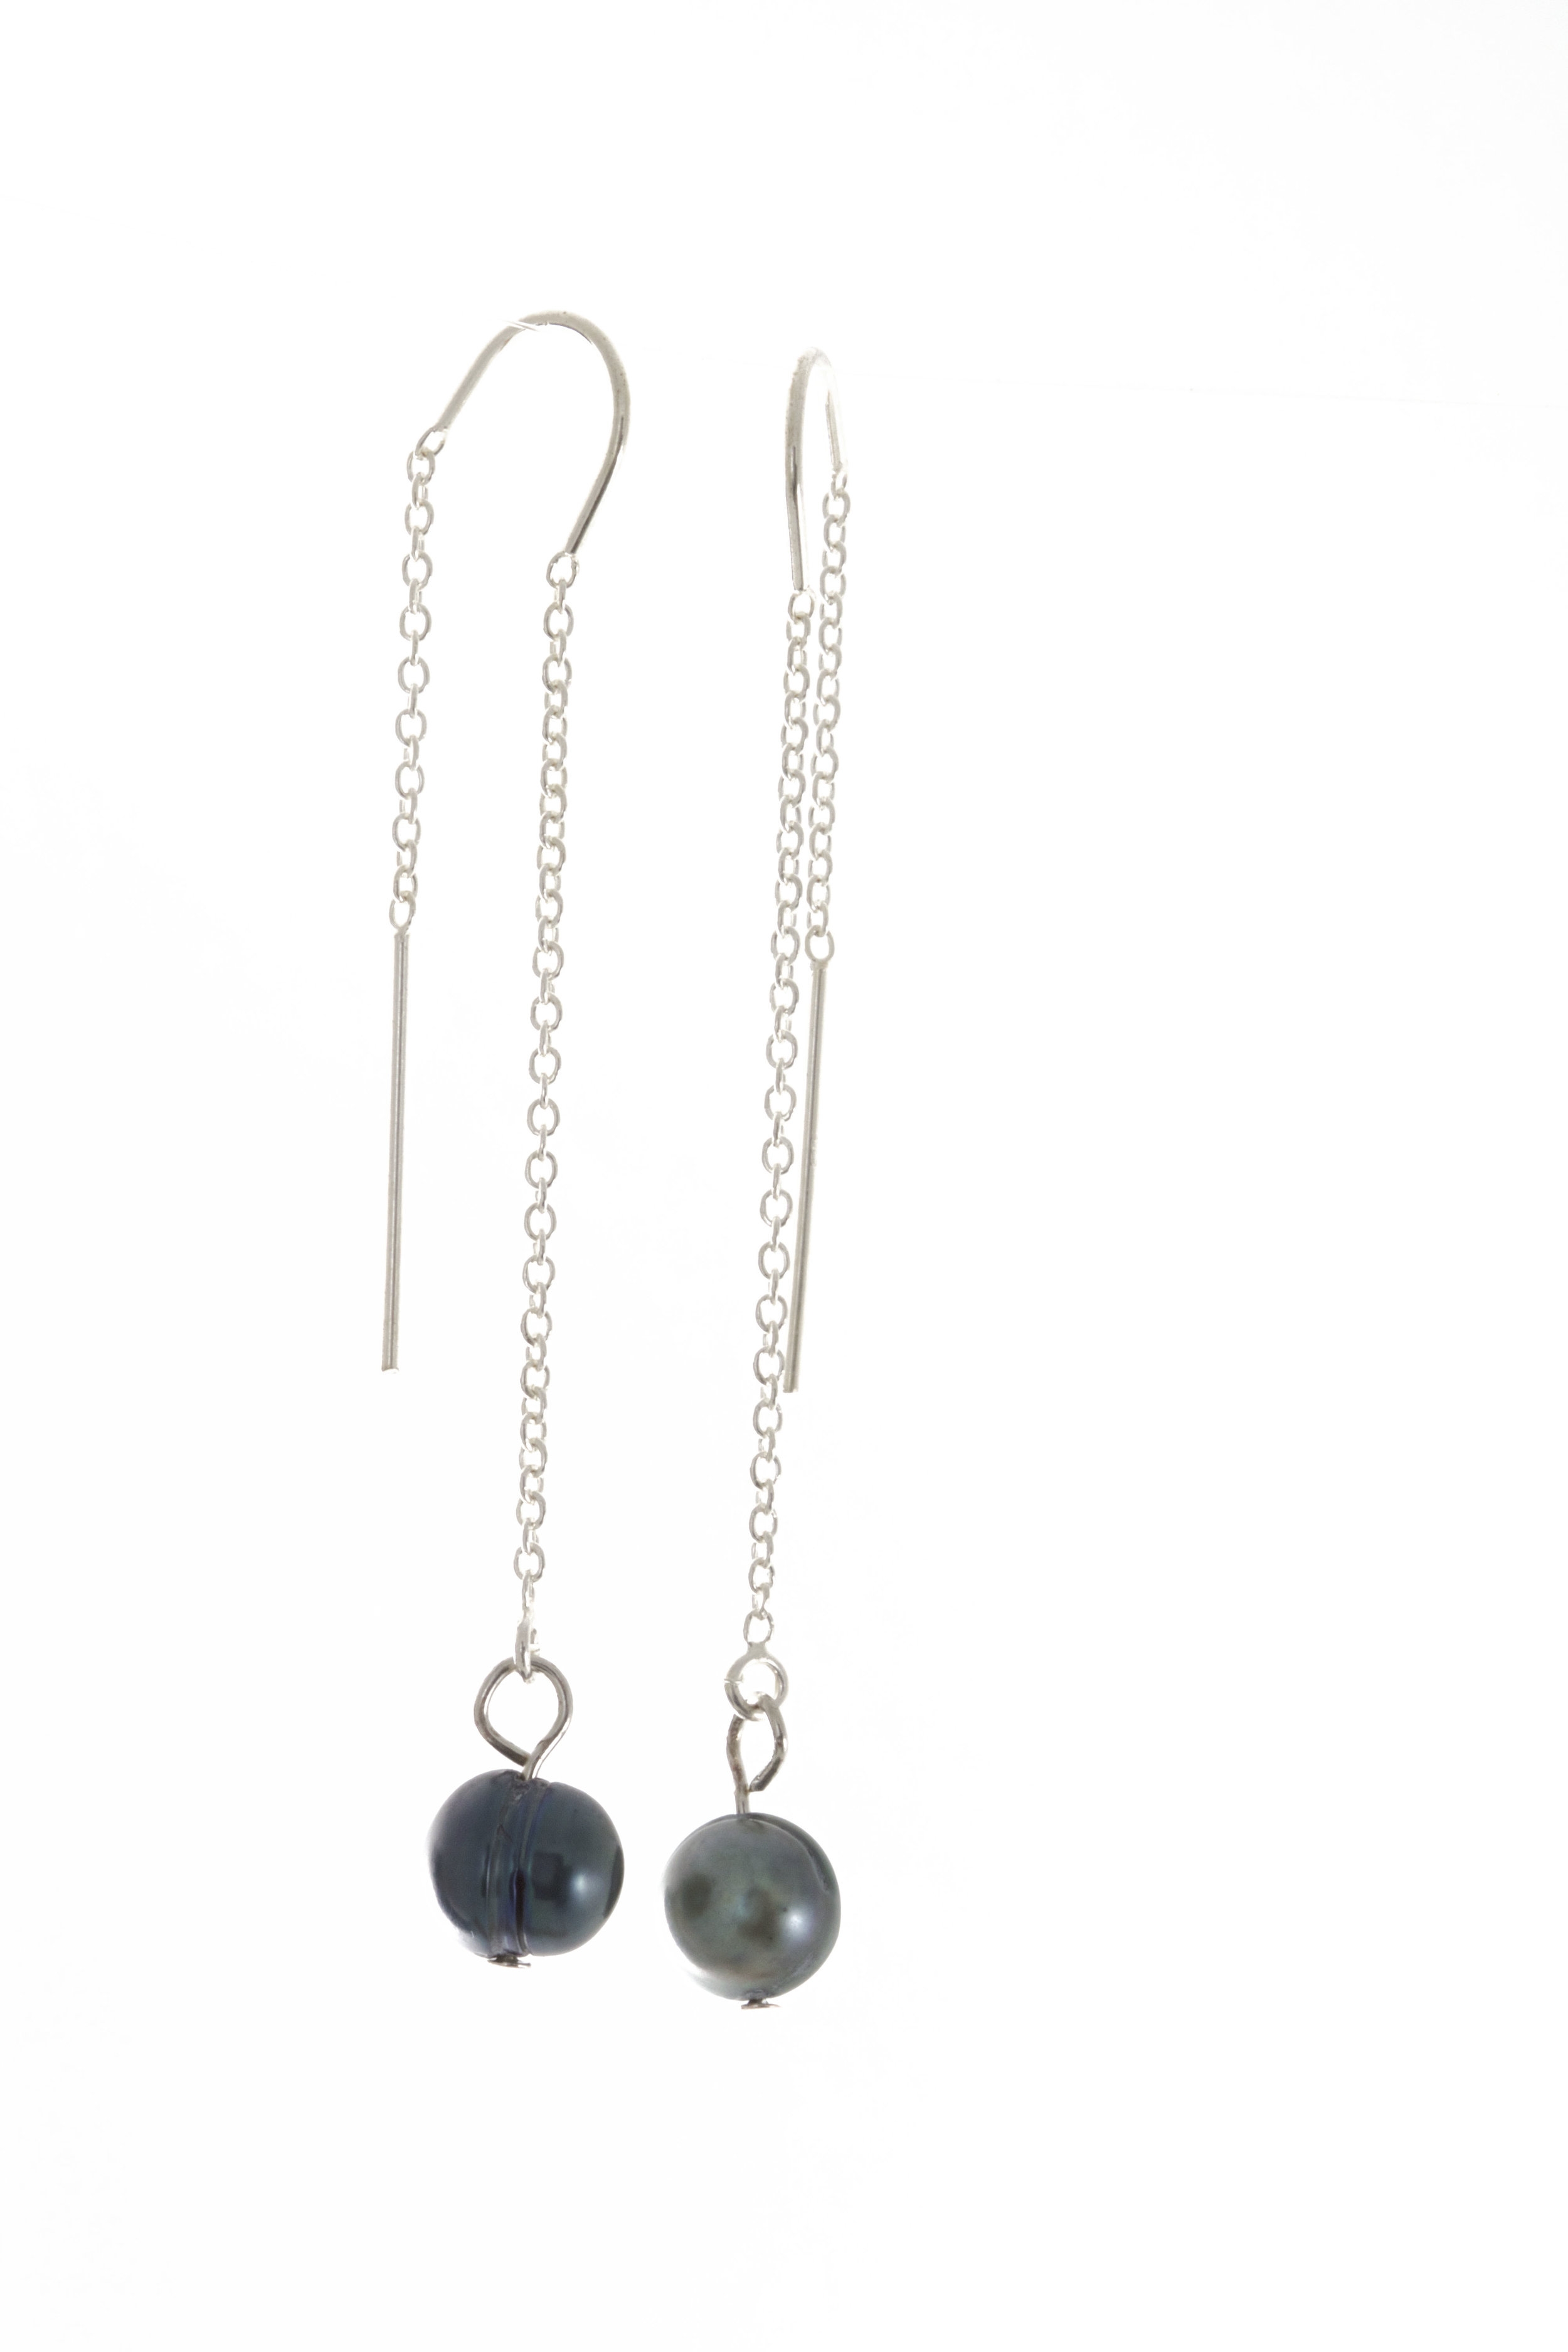 Blue baroque pearl earrings sterling silver ear wires.